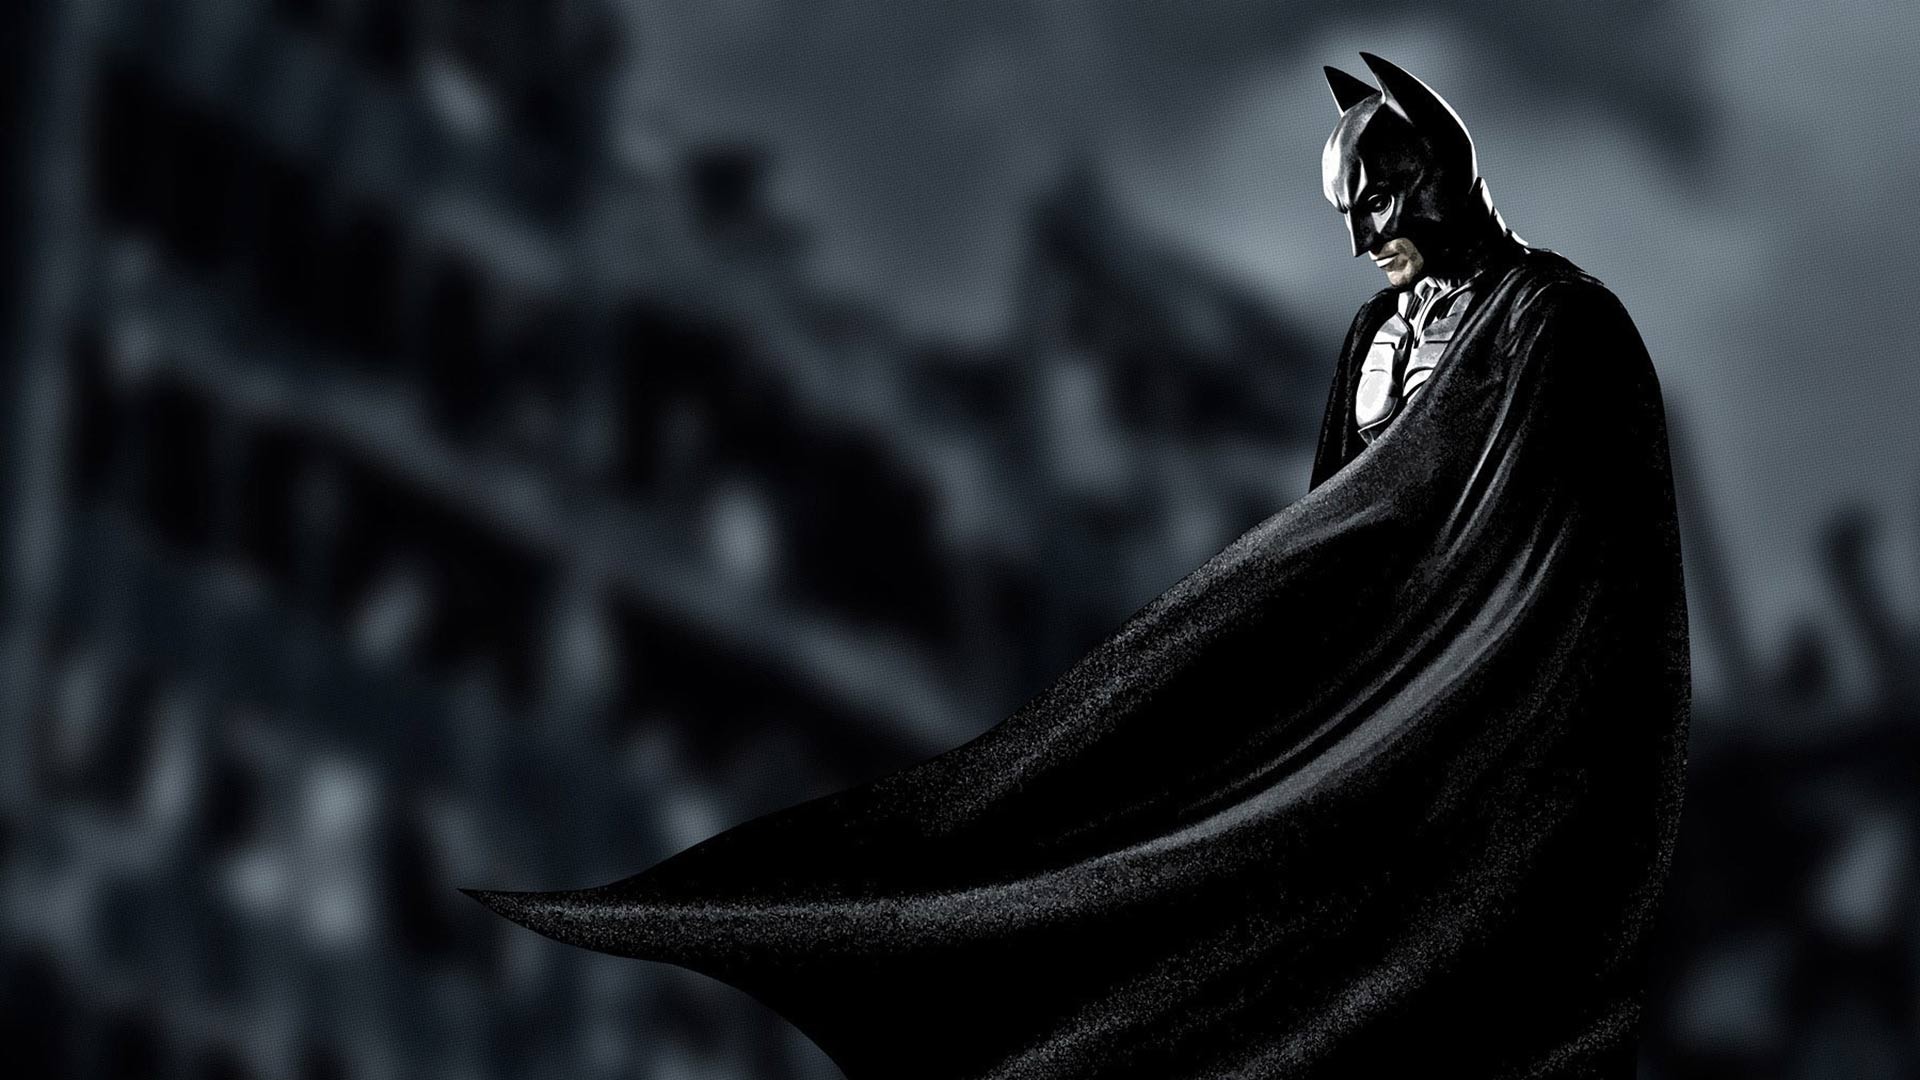 General 1920x1080 Batman movies cape superhero DC Comics Christian Bale actor Warner Brothers Christopher Nolan